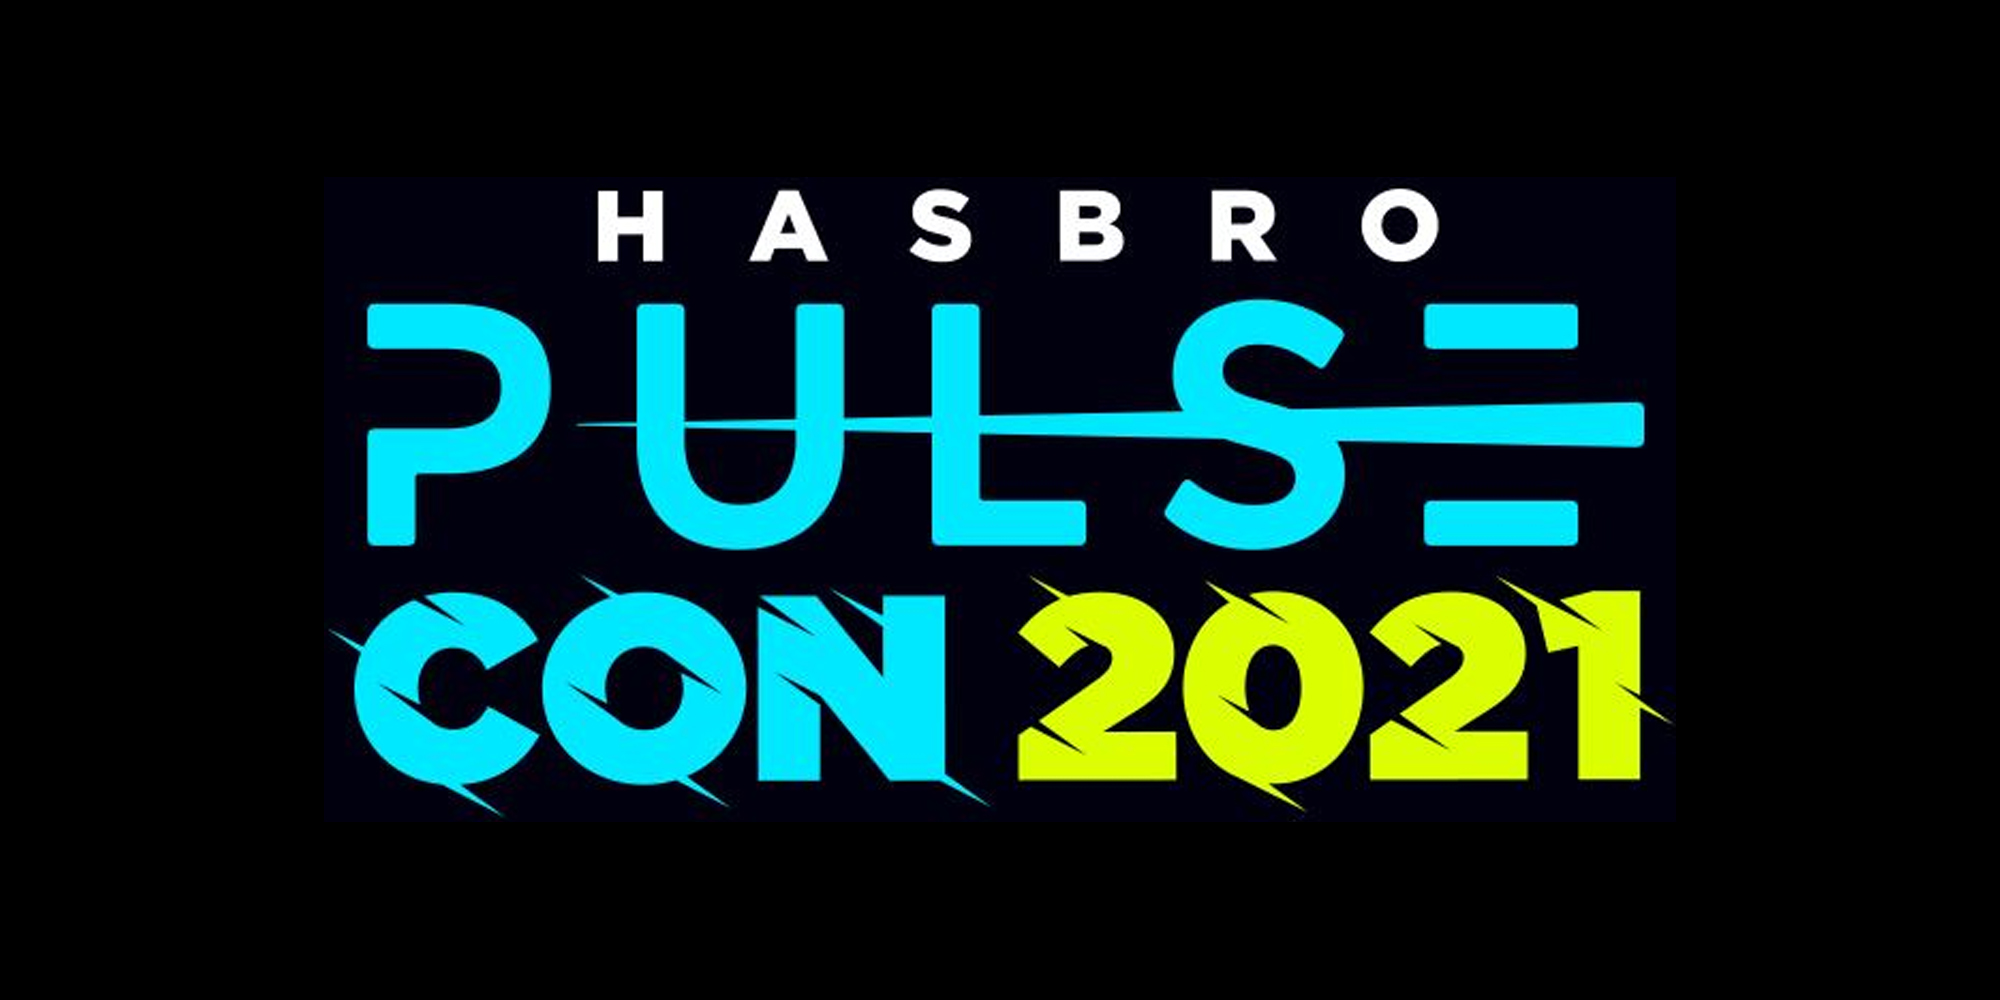 Hasbro Pulse Con 2021 Announced